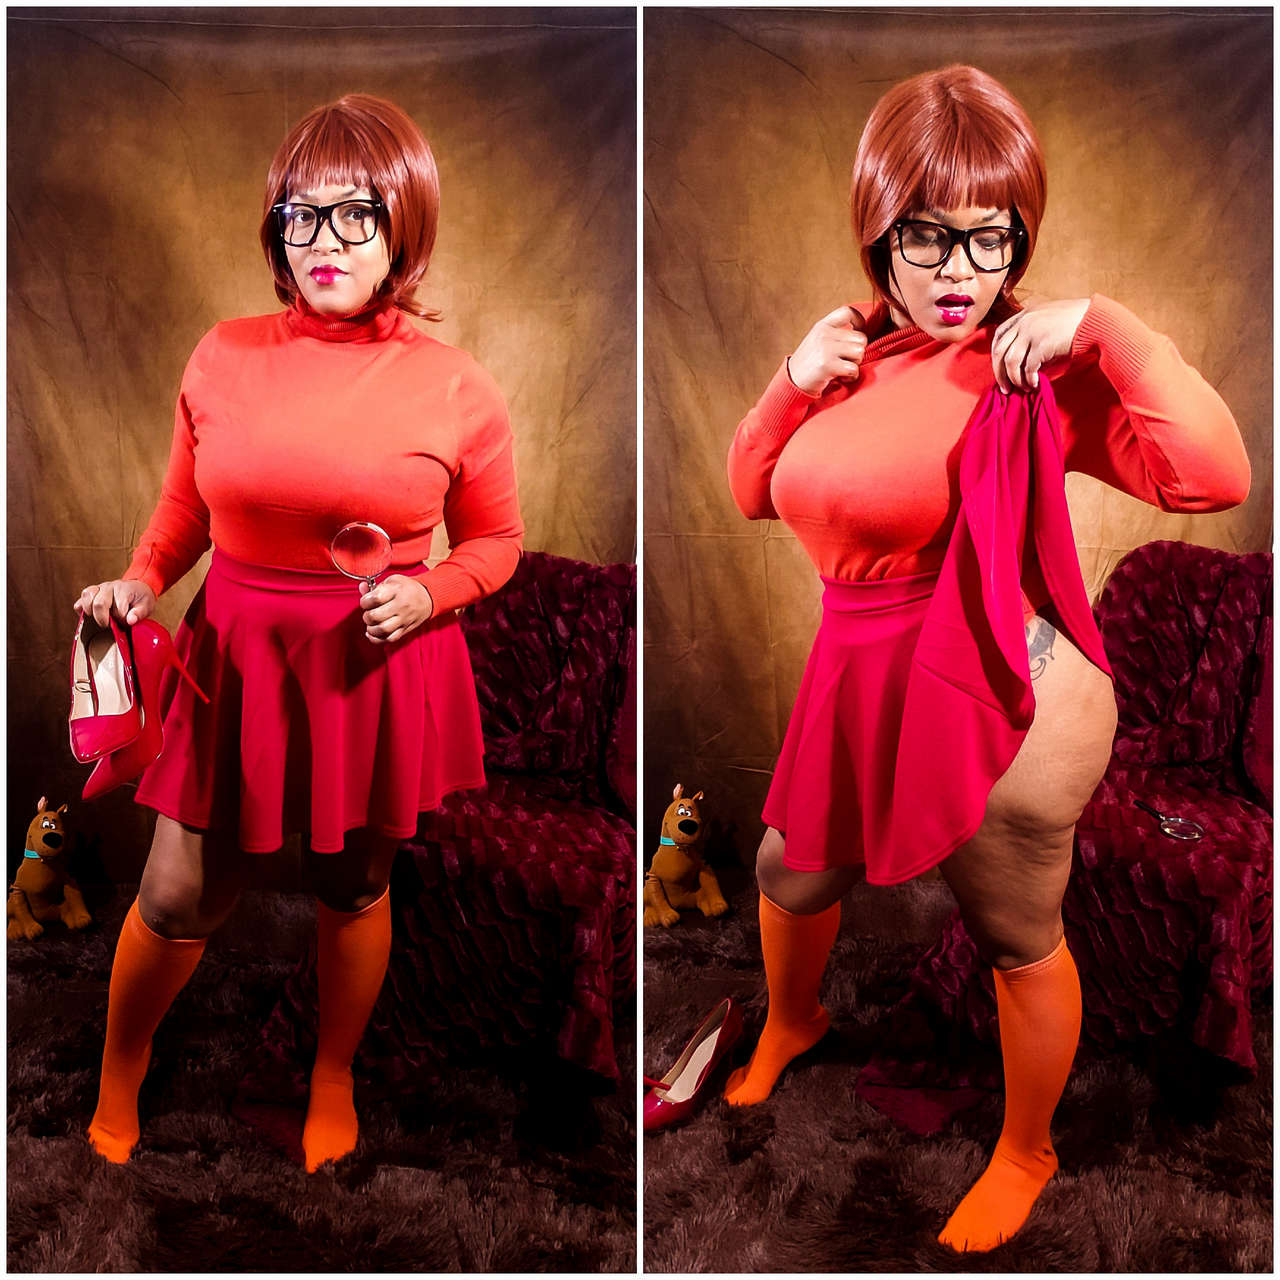 Self Velma From Scooby Doo Cospla